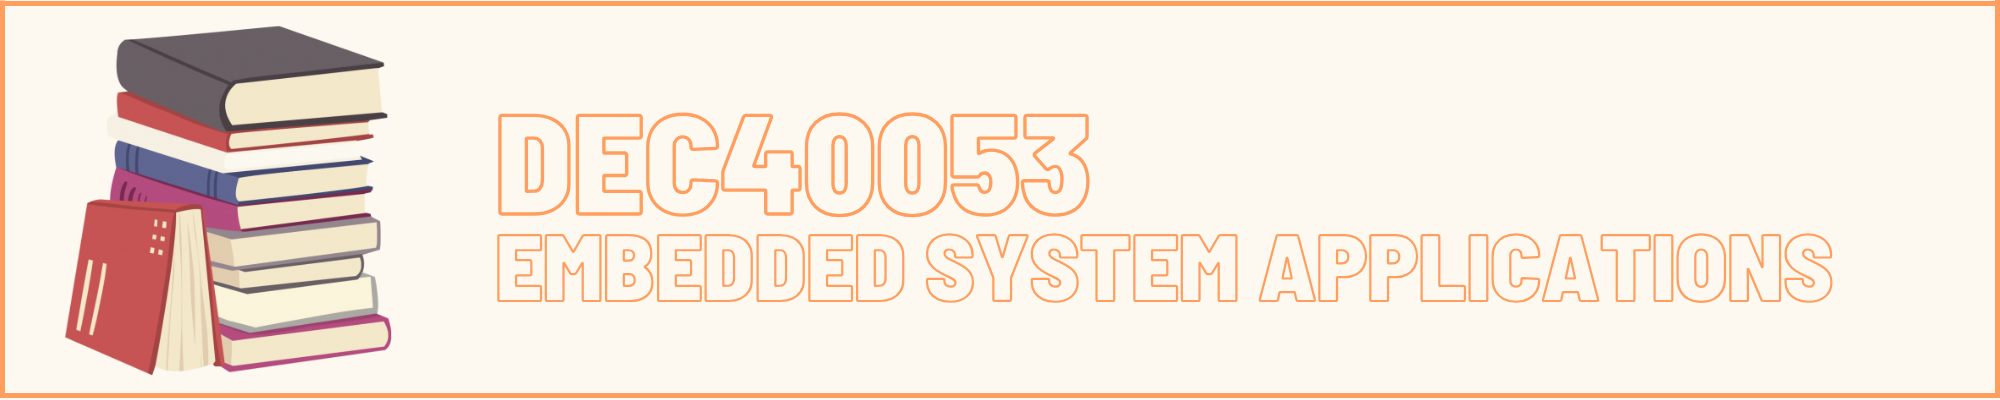 DEC40053 EMBEDDED SYSTEM APPLICATION